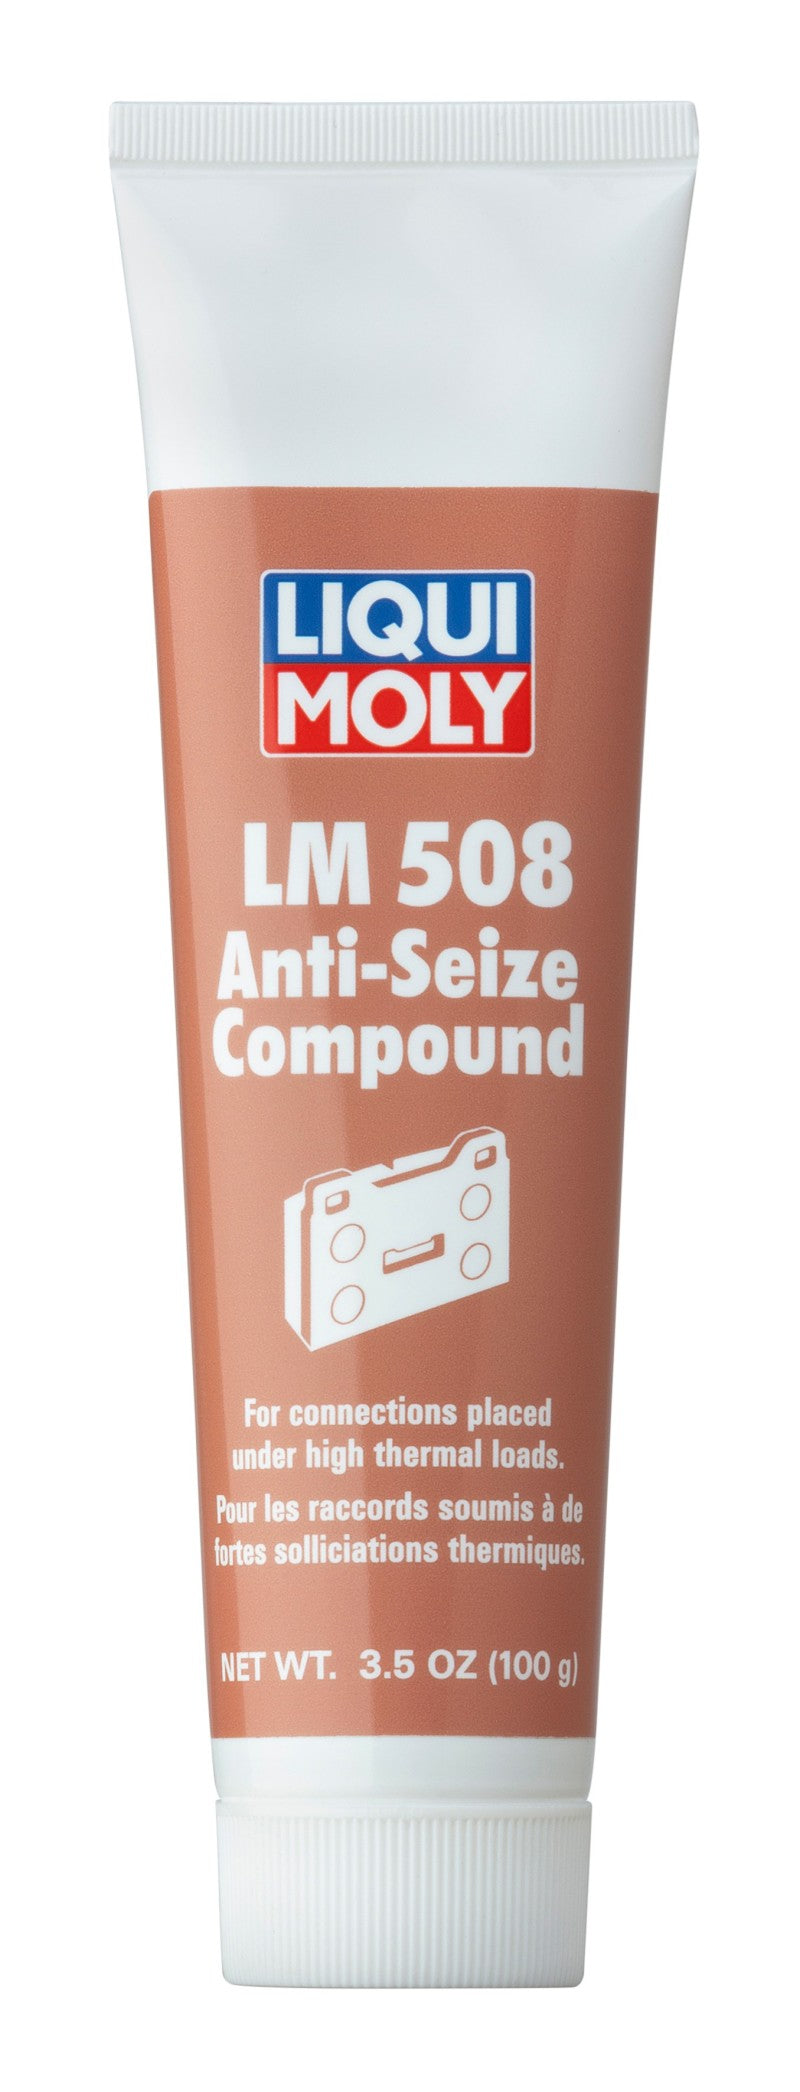 LIQUI MOLY 100mL LM 508 Anti-Seize Compound.